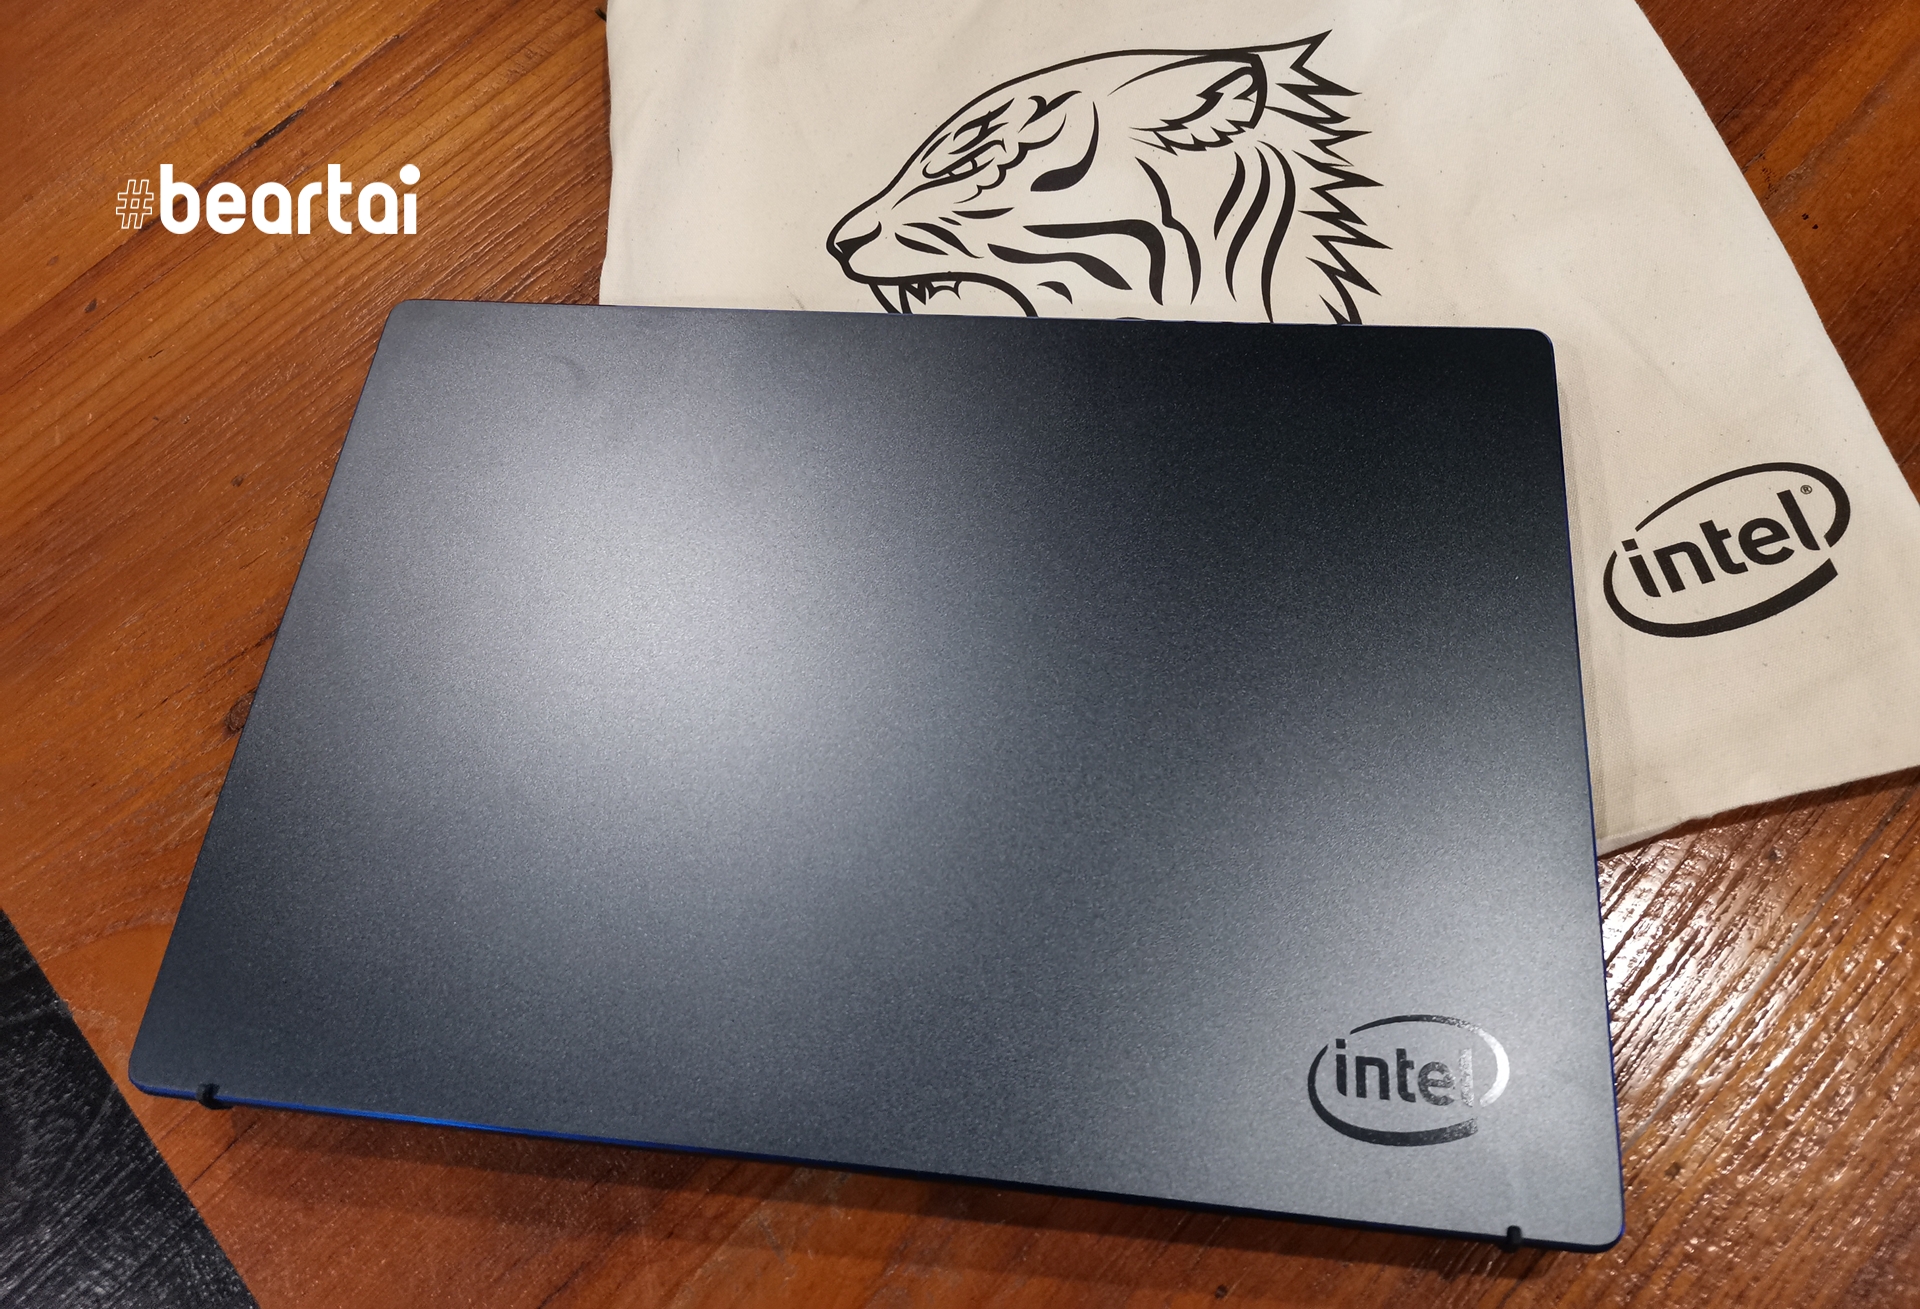 [Exclusive Hands-On] ลองใช้งาน Intel Tiger Lake Laptop ก่อนผลิตจริง !!